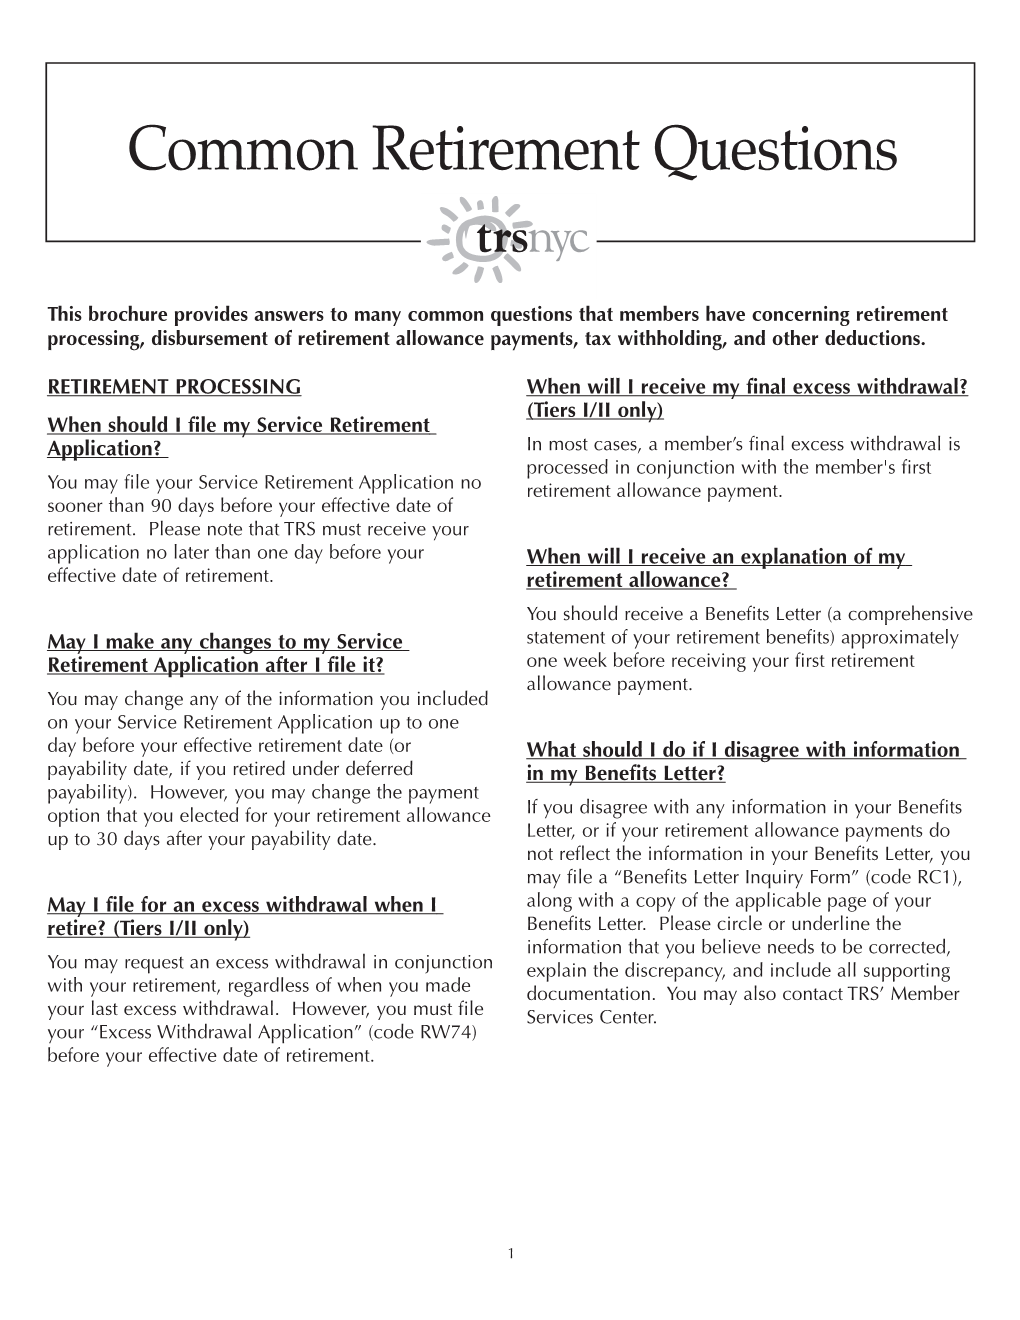 Common Retirement Questions (Code 7.5)